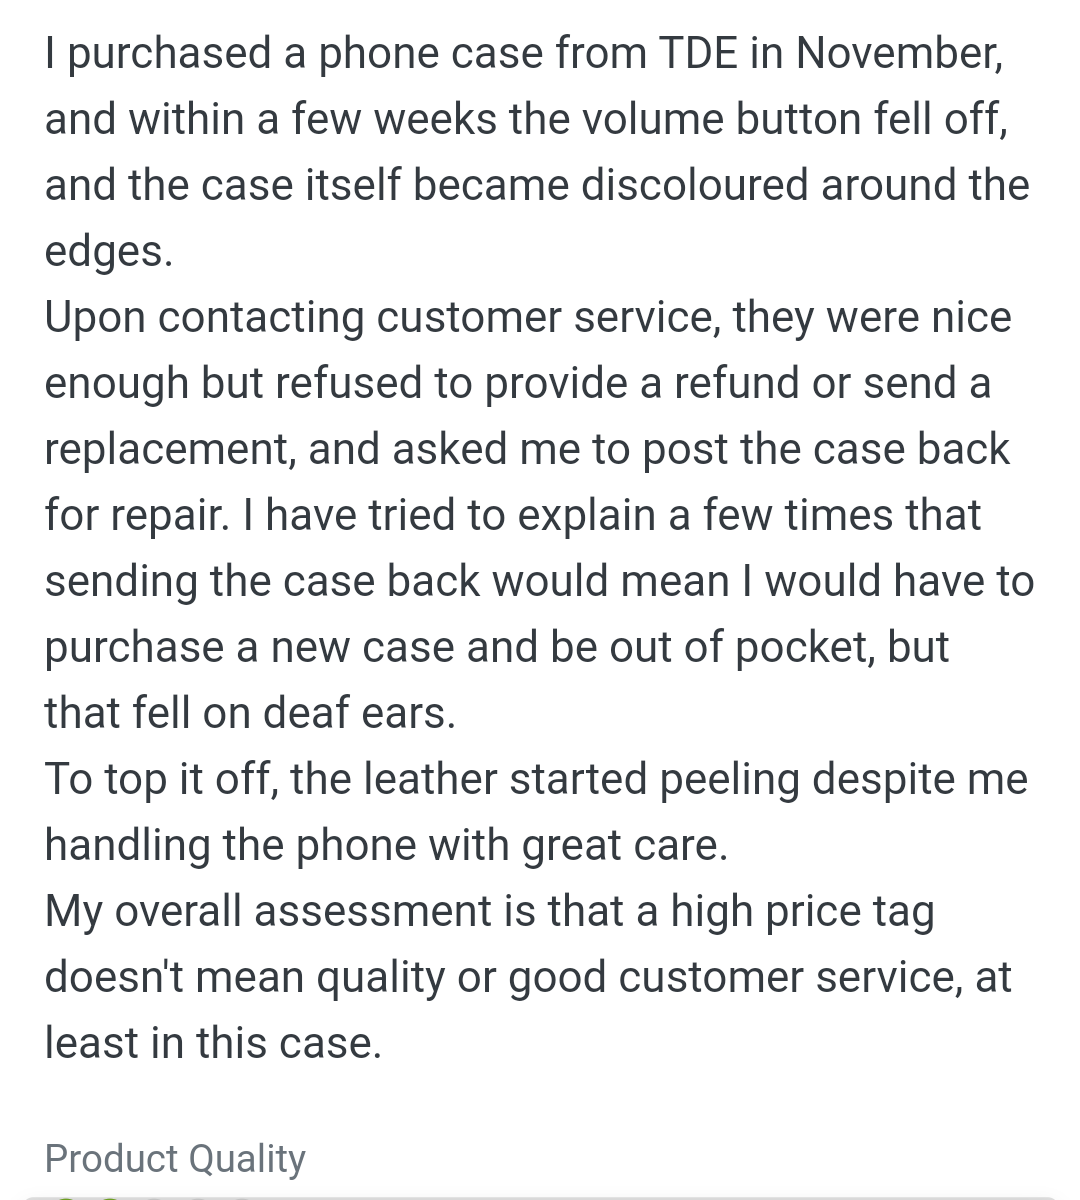 TDE phone case review